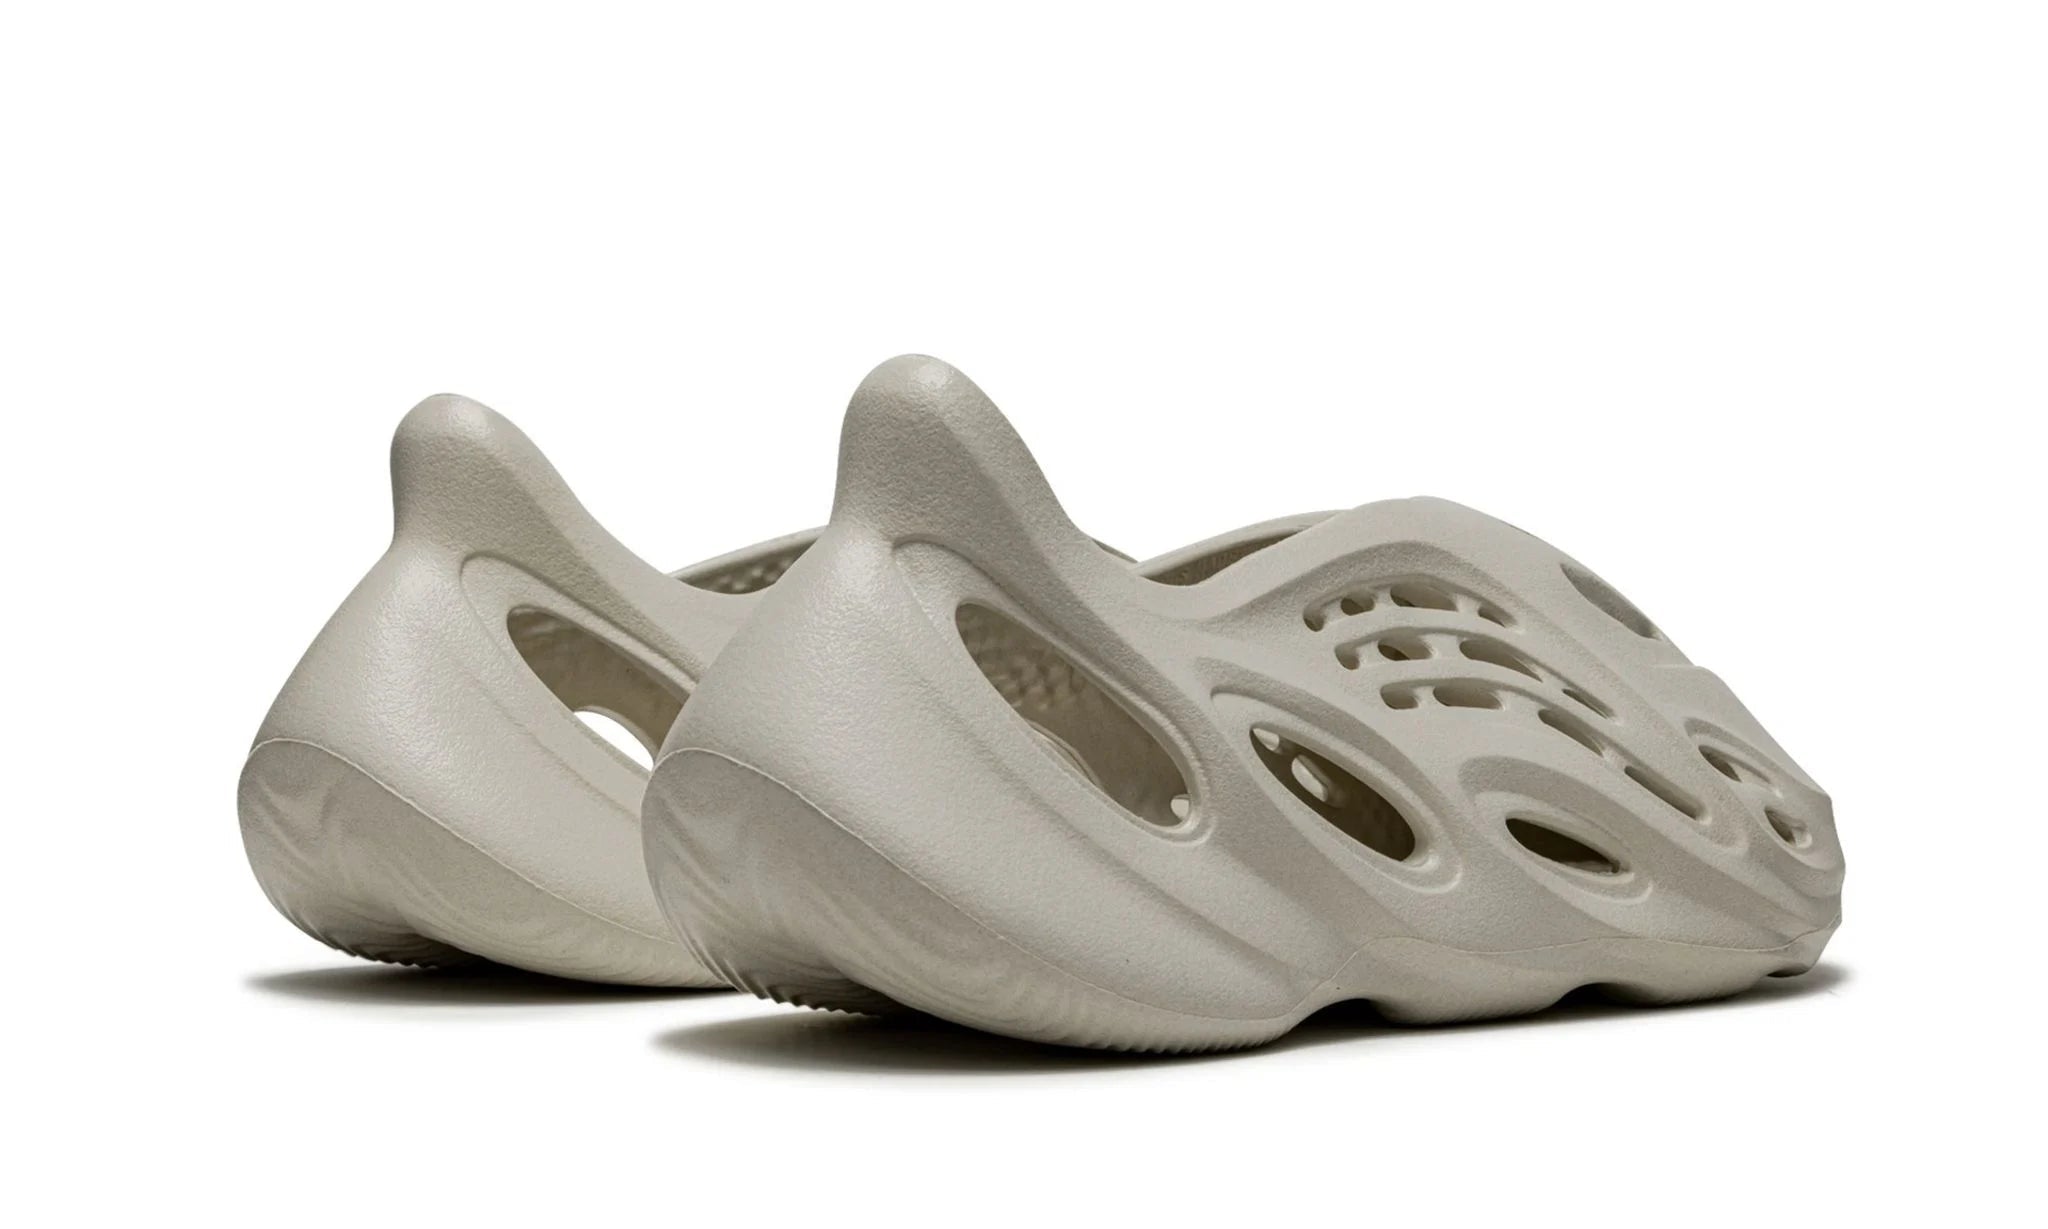 Adidas Yeezy Foam Runner Sand - - - Pirri